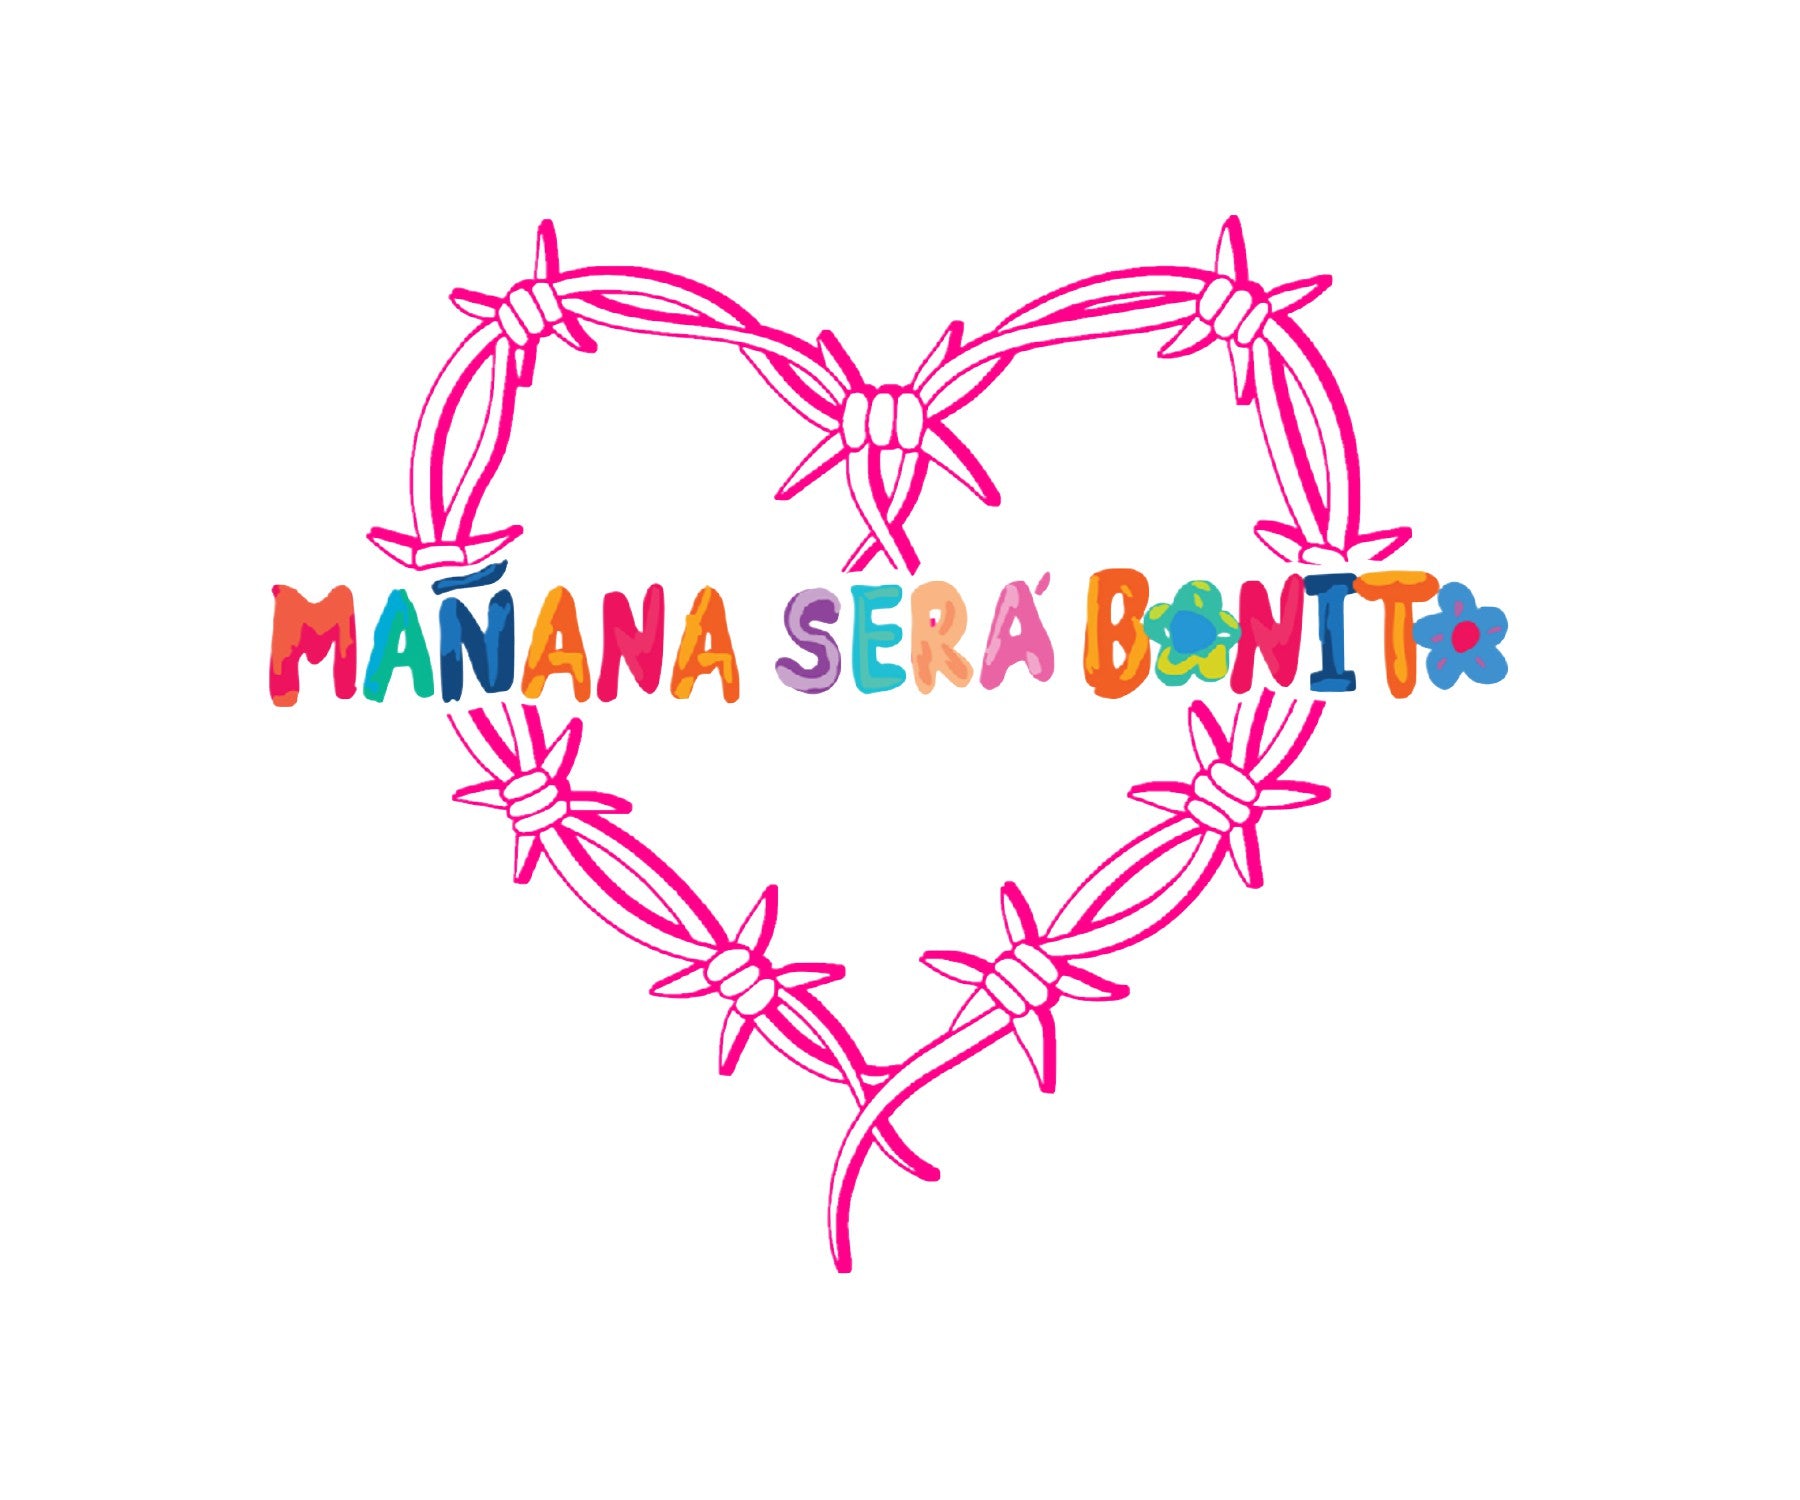 Mañana Sera Bonito GIFs on GIPHY  Be Animated